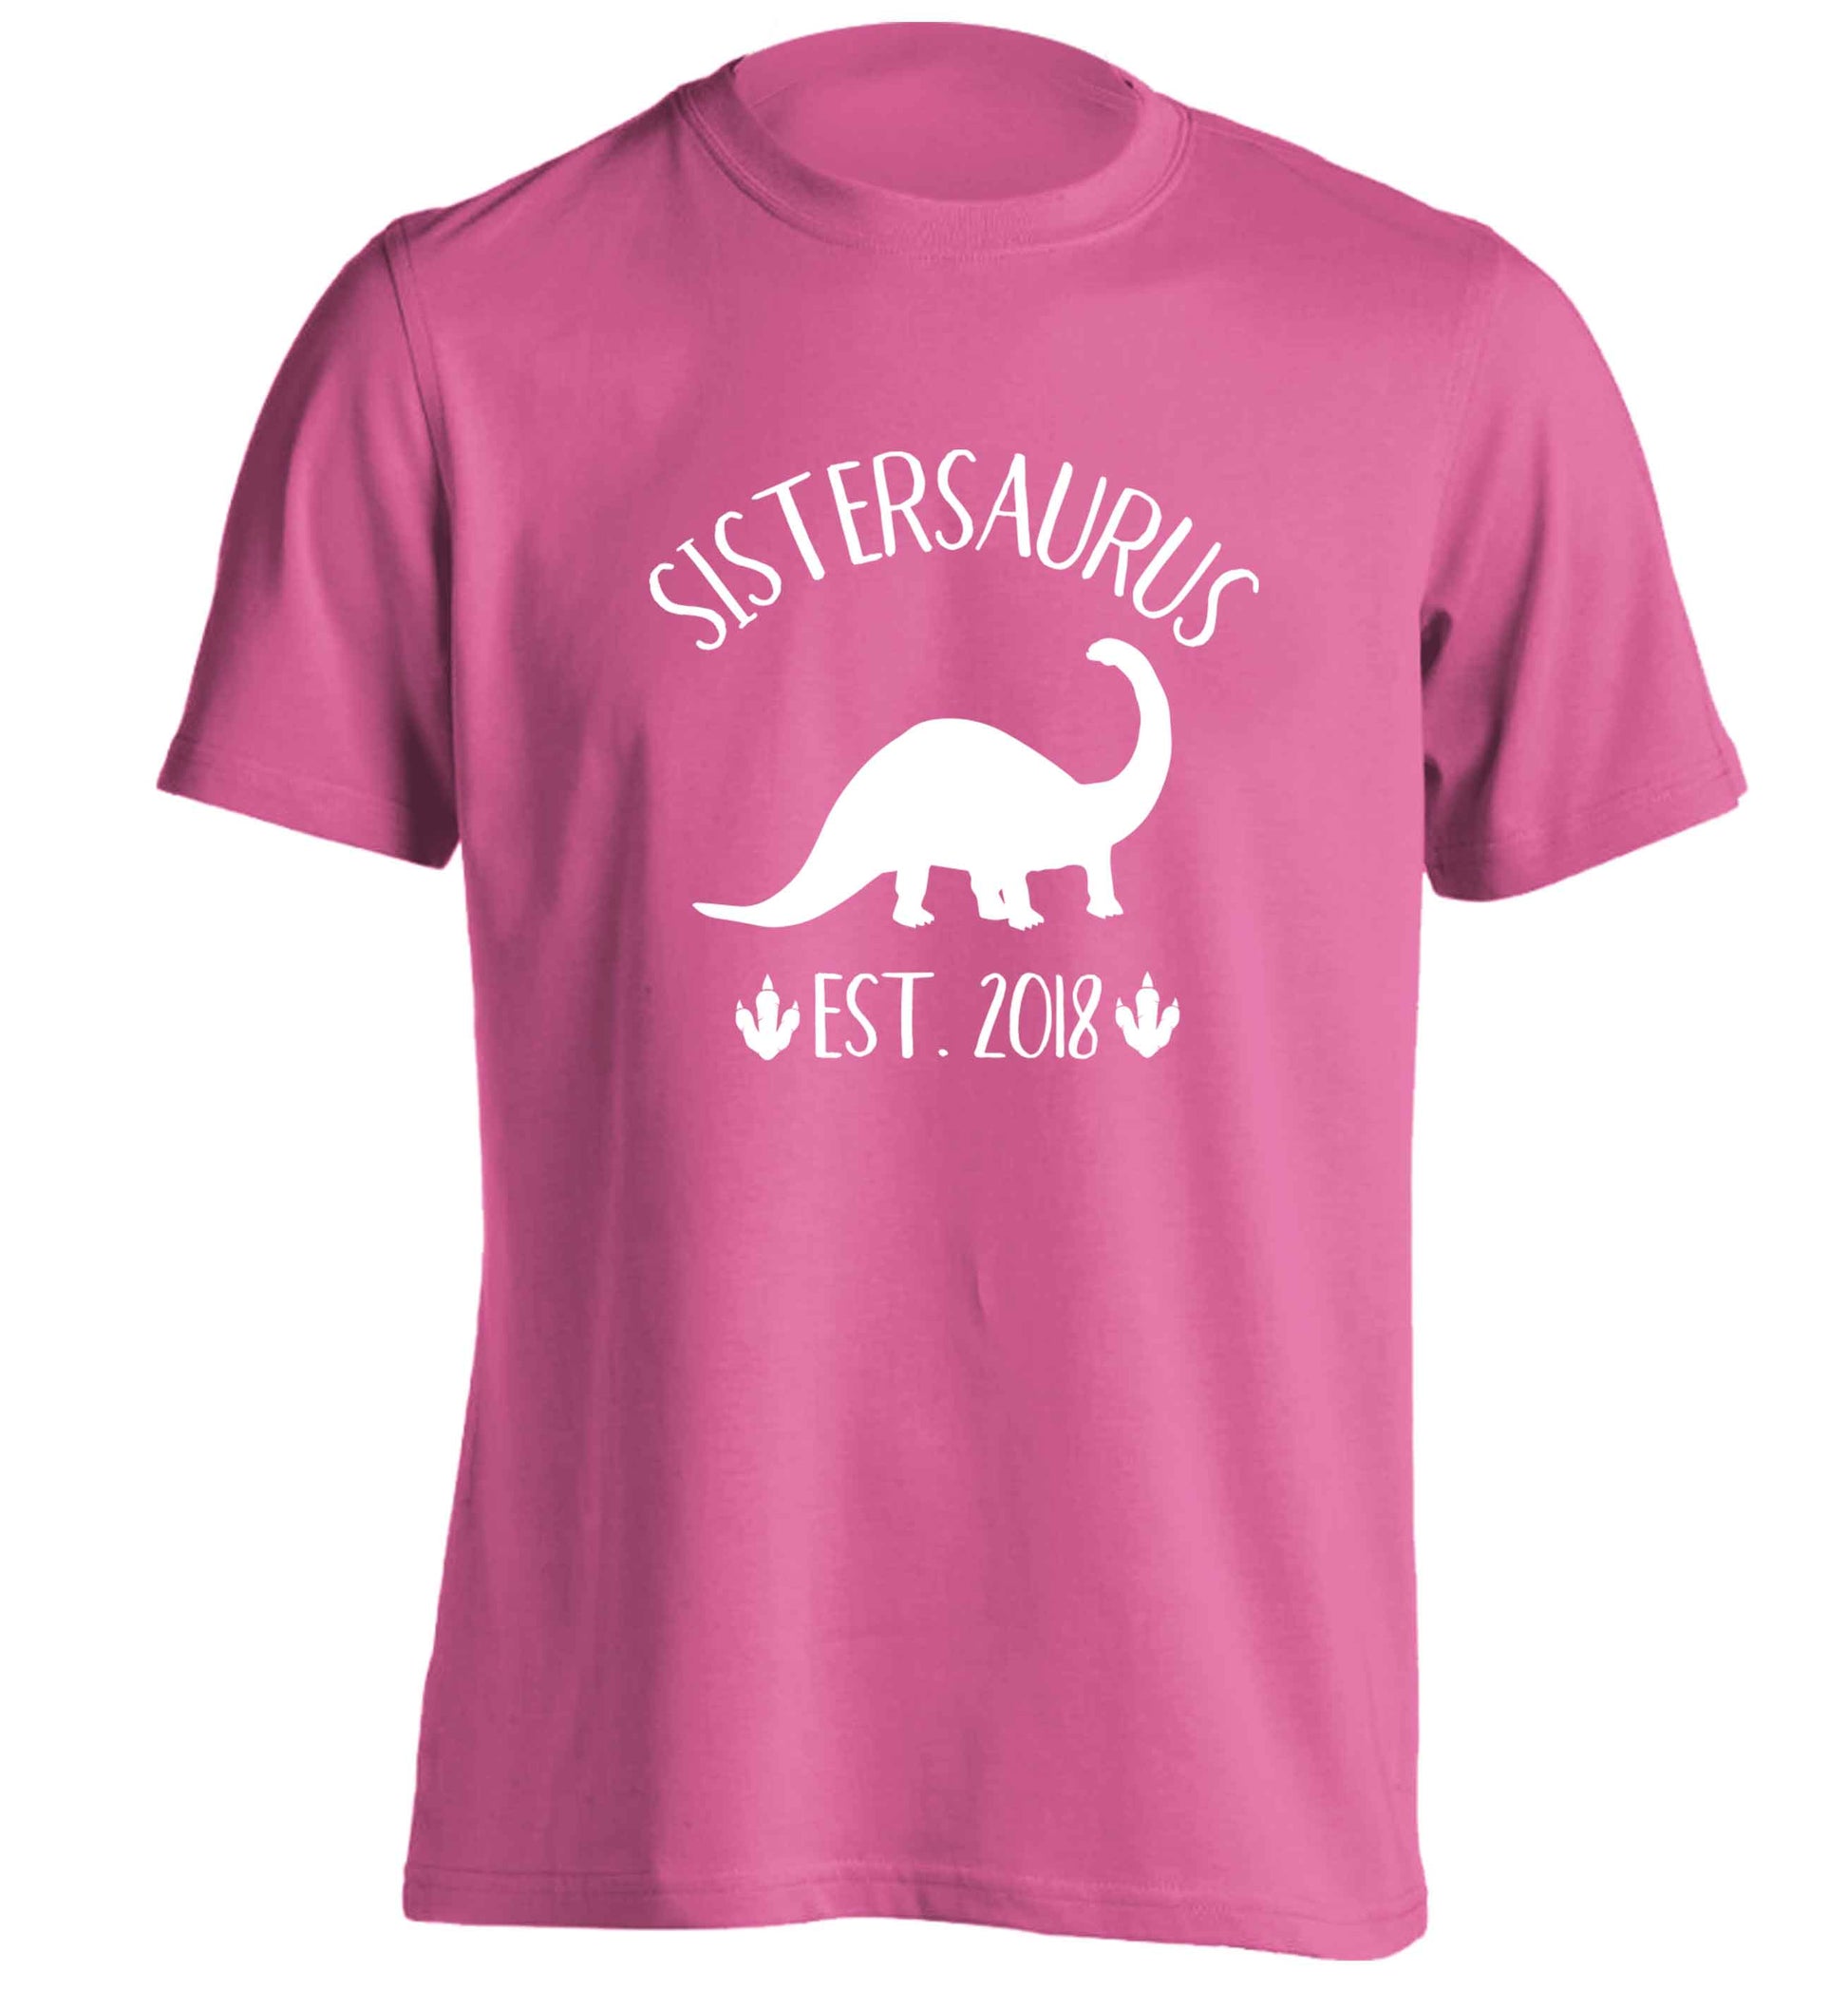 Personalised sistersaurus since (custom date) adults unisex pink Tshirt 2XL